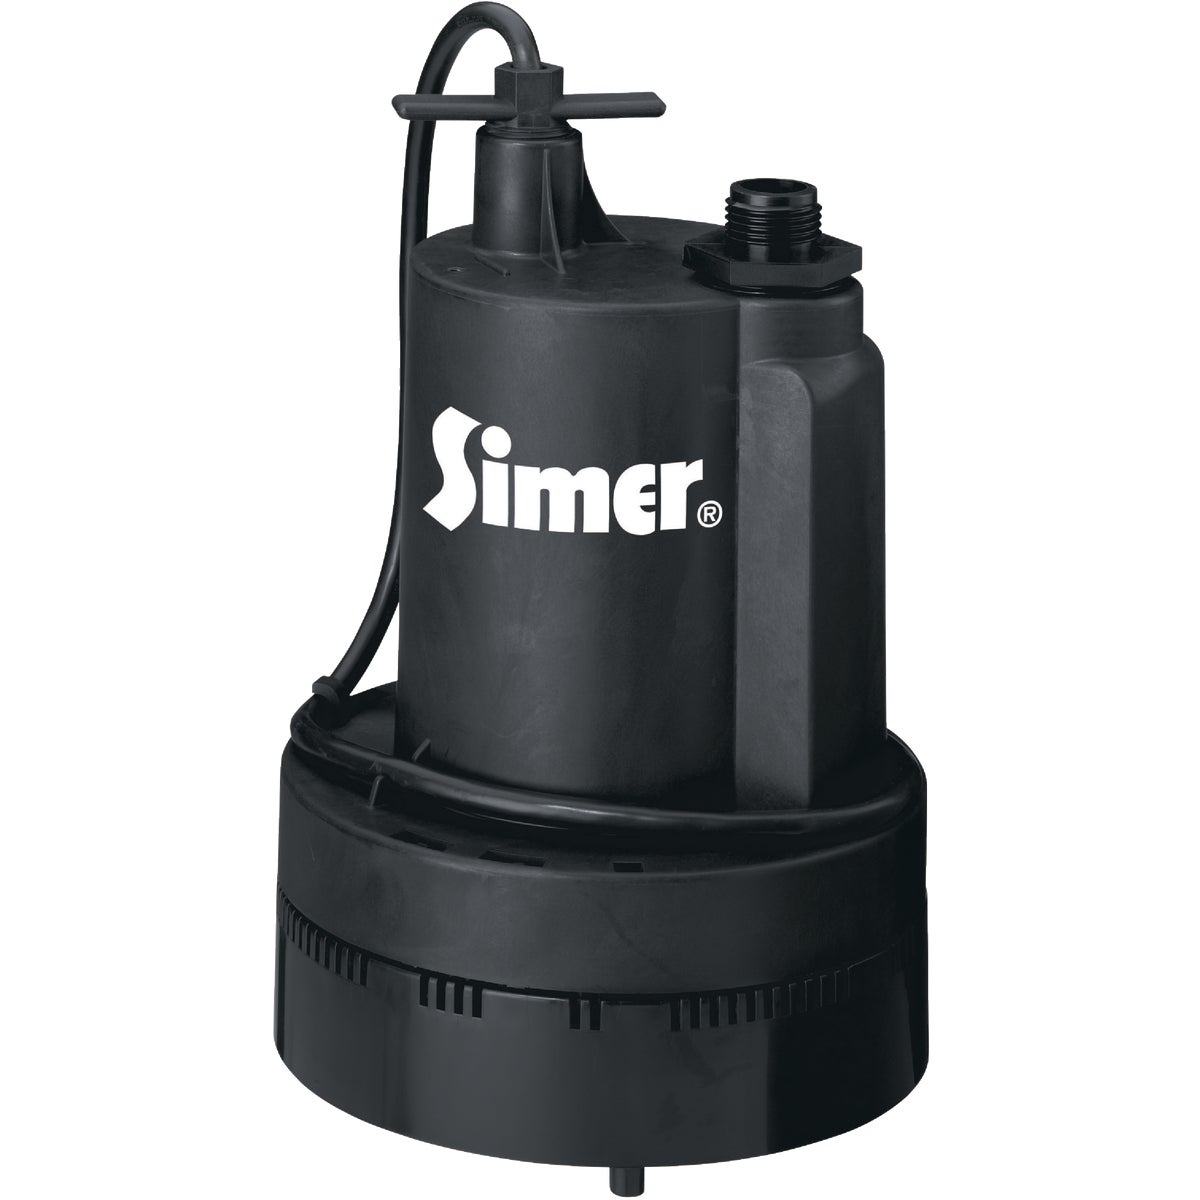 Simer 1/3 HP 115V Submersible Utility Pump